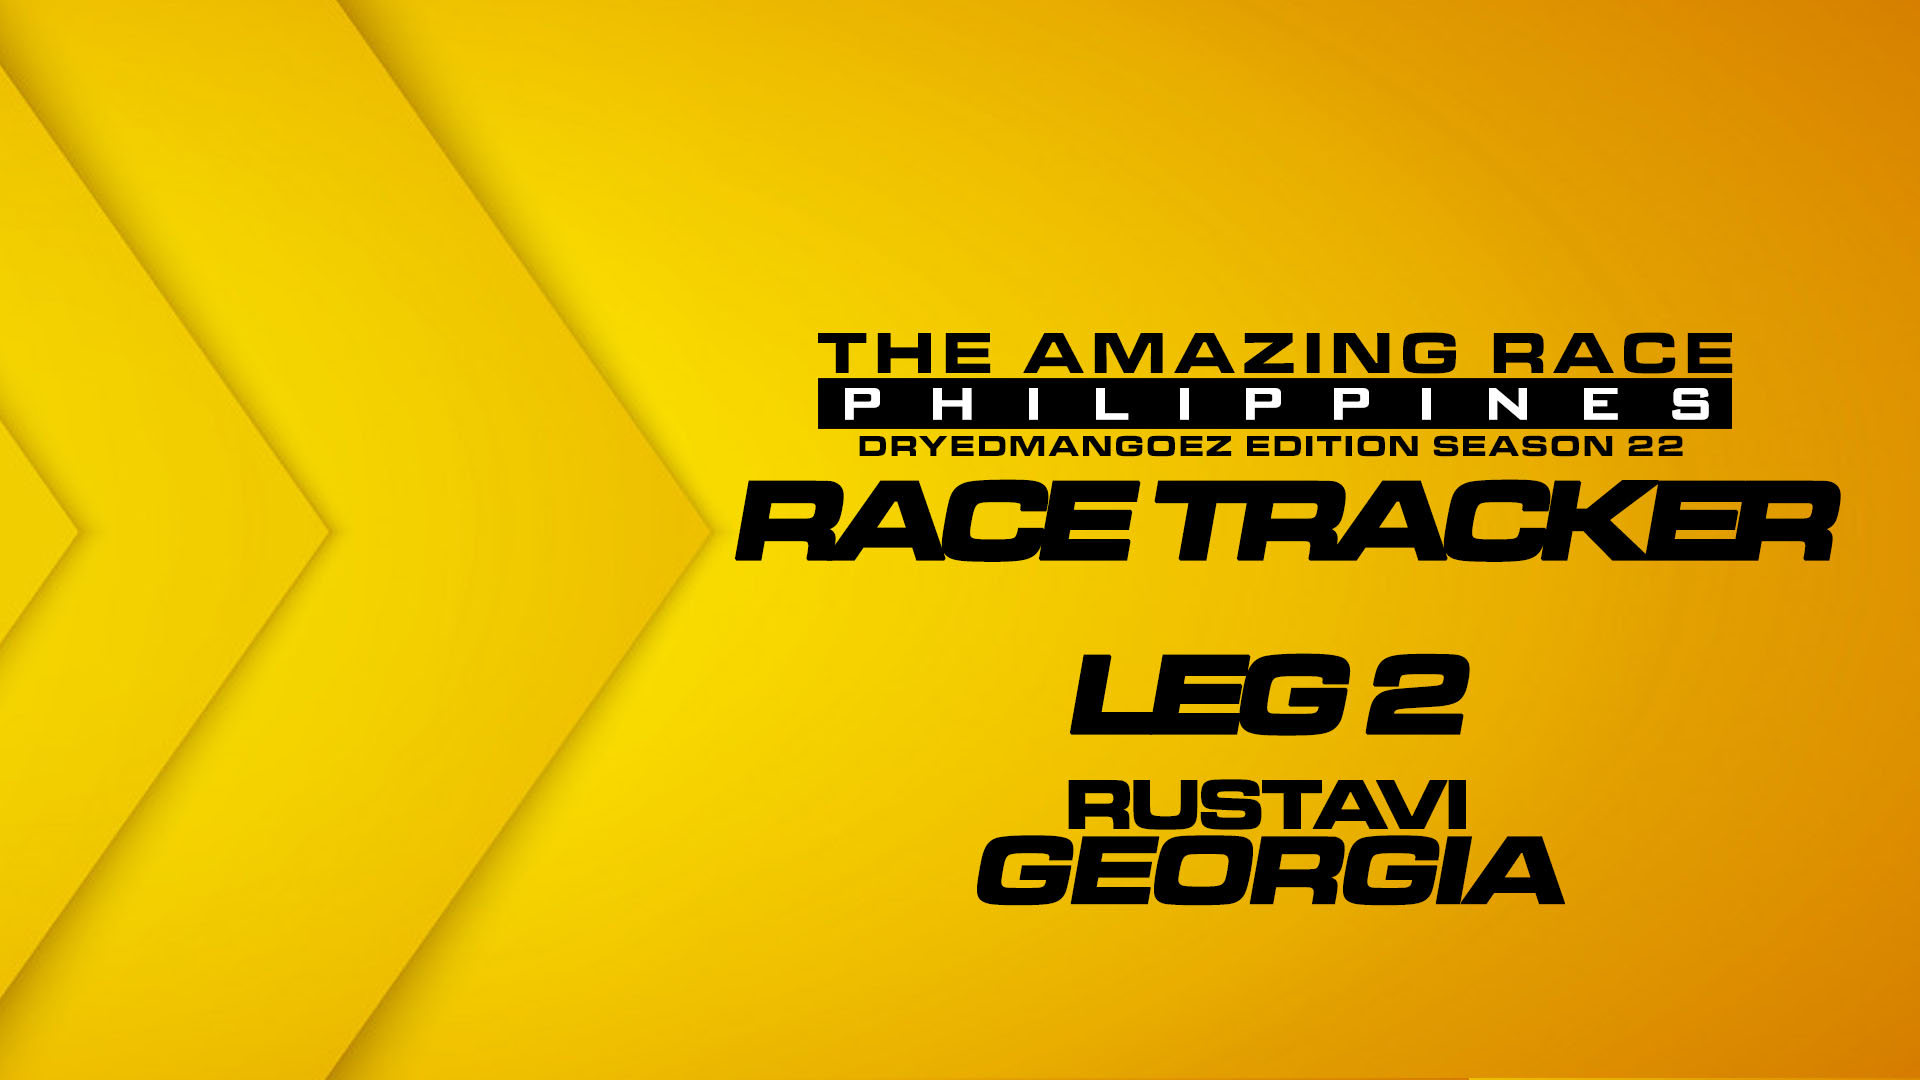 The Amazing Race Philippines: DryedMangoez Edition Season 22 Race Tracker – Leg 2